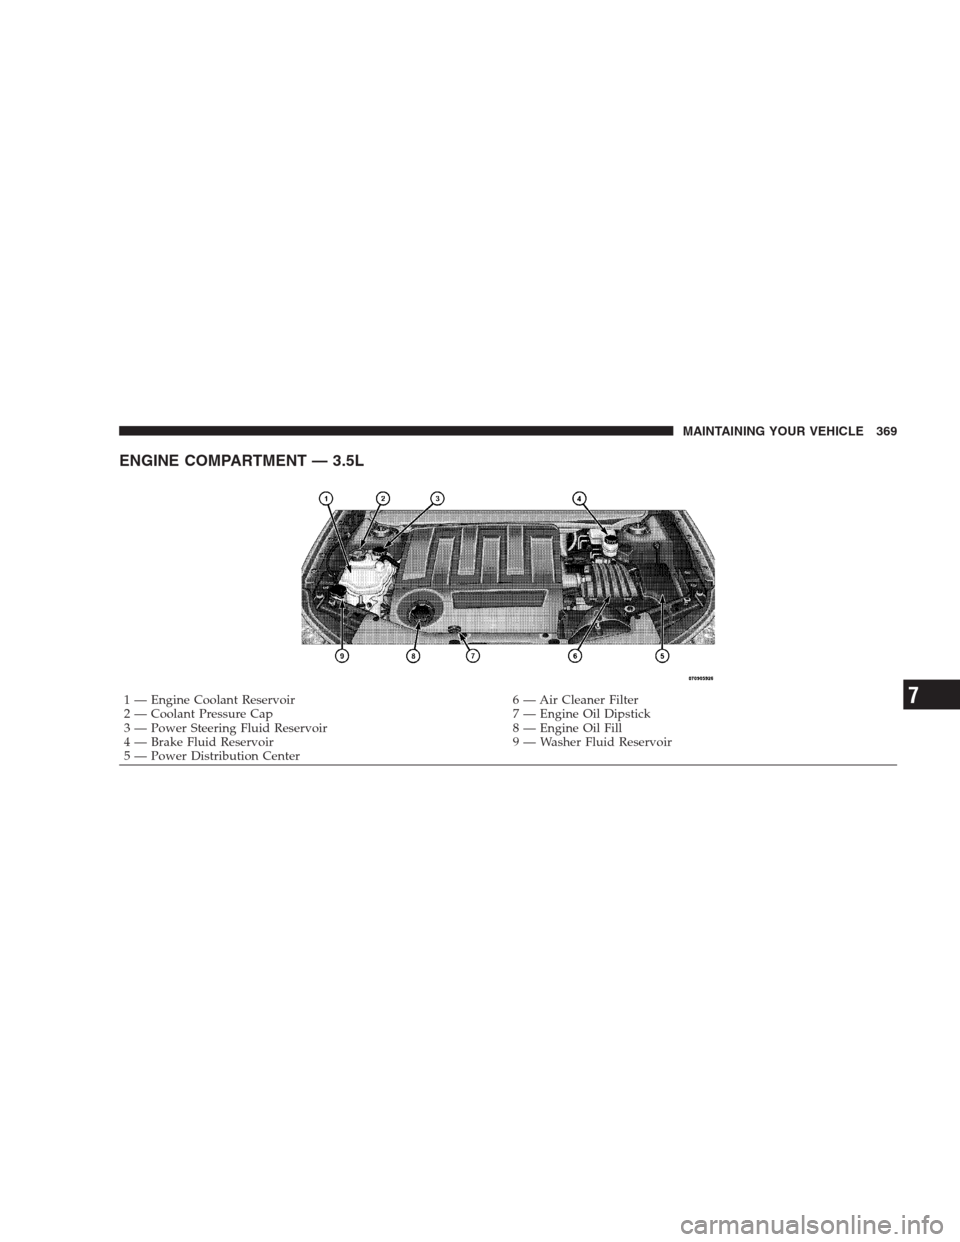 DODGE AVENGER 2009 2.G User Guide ENGINE COMPARTMENT — 3.5L
1 — Engine Coolant Reservoir 6 — Air Cleaner Filter
2 — Coolant Pressure Cap 7 — Engine Oil Dipstick
3 — Power Steering Fluid Reservoir 8 — Engine Oil Fill
4 �